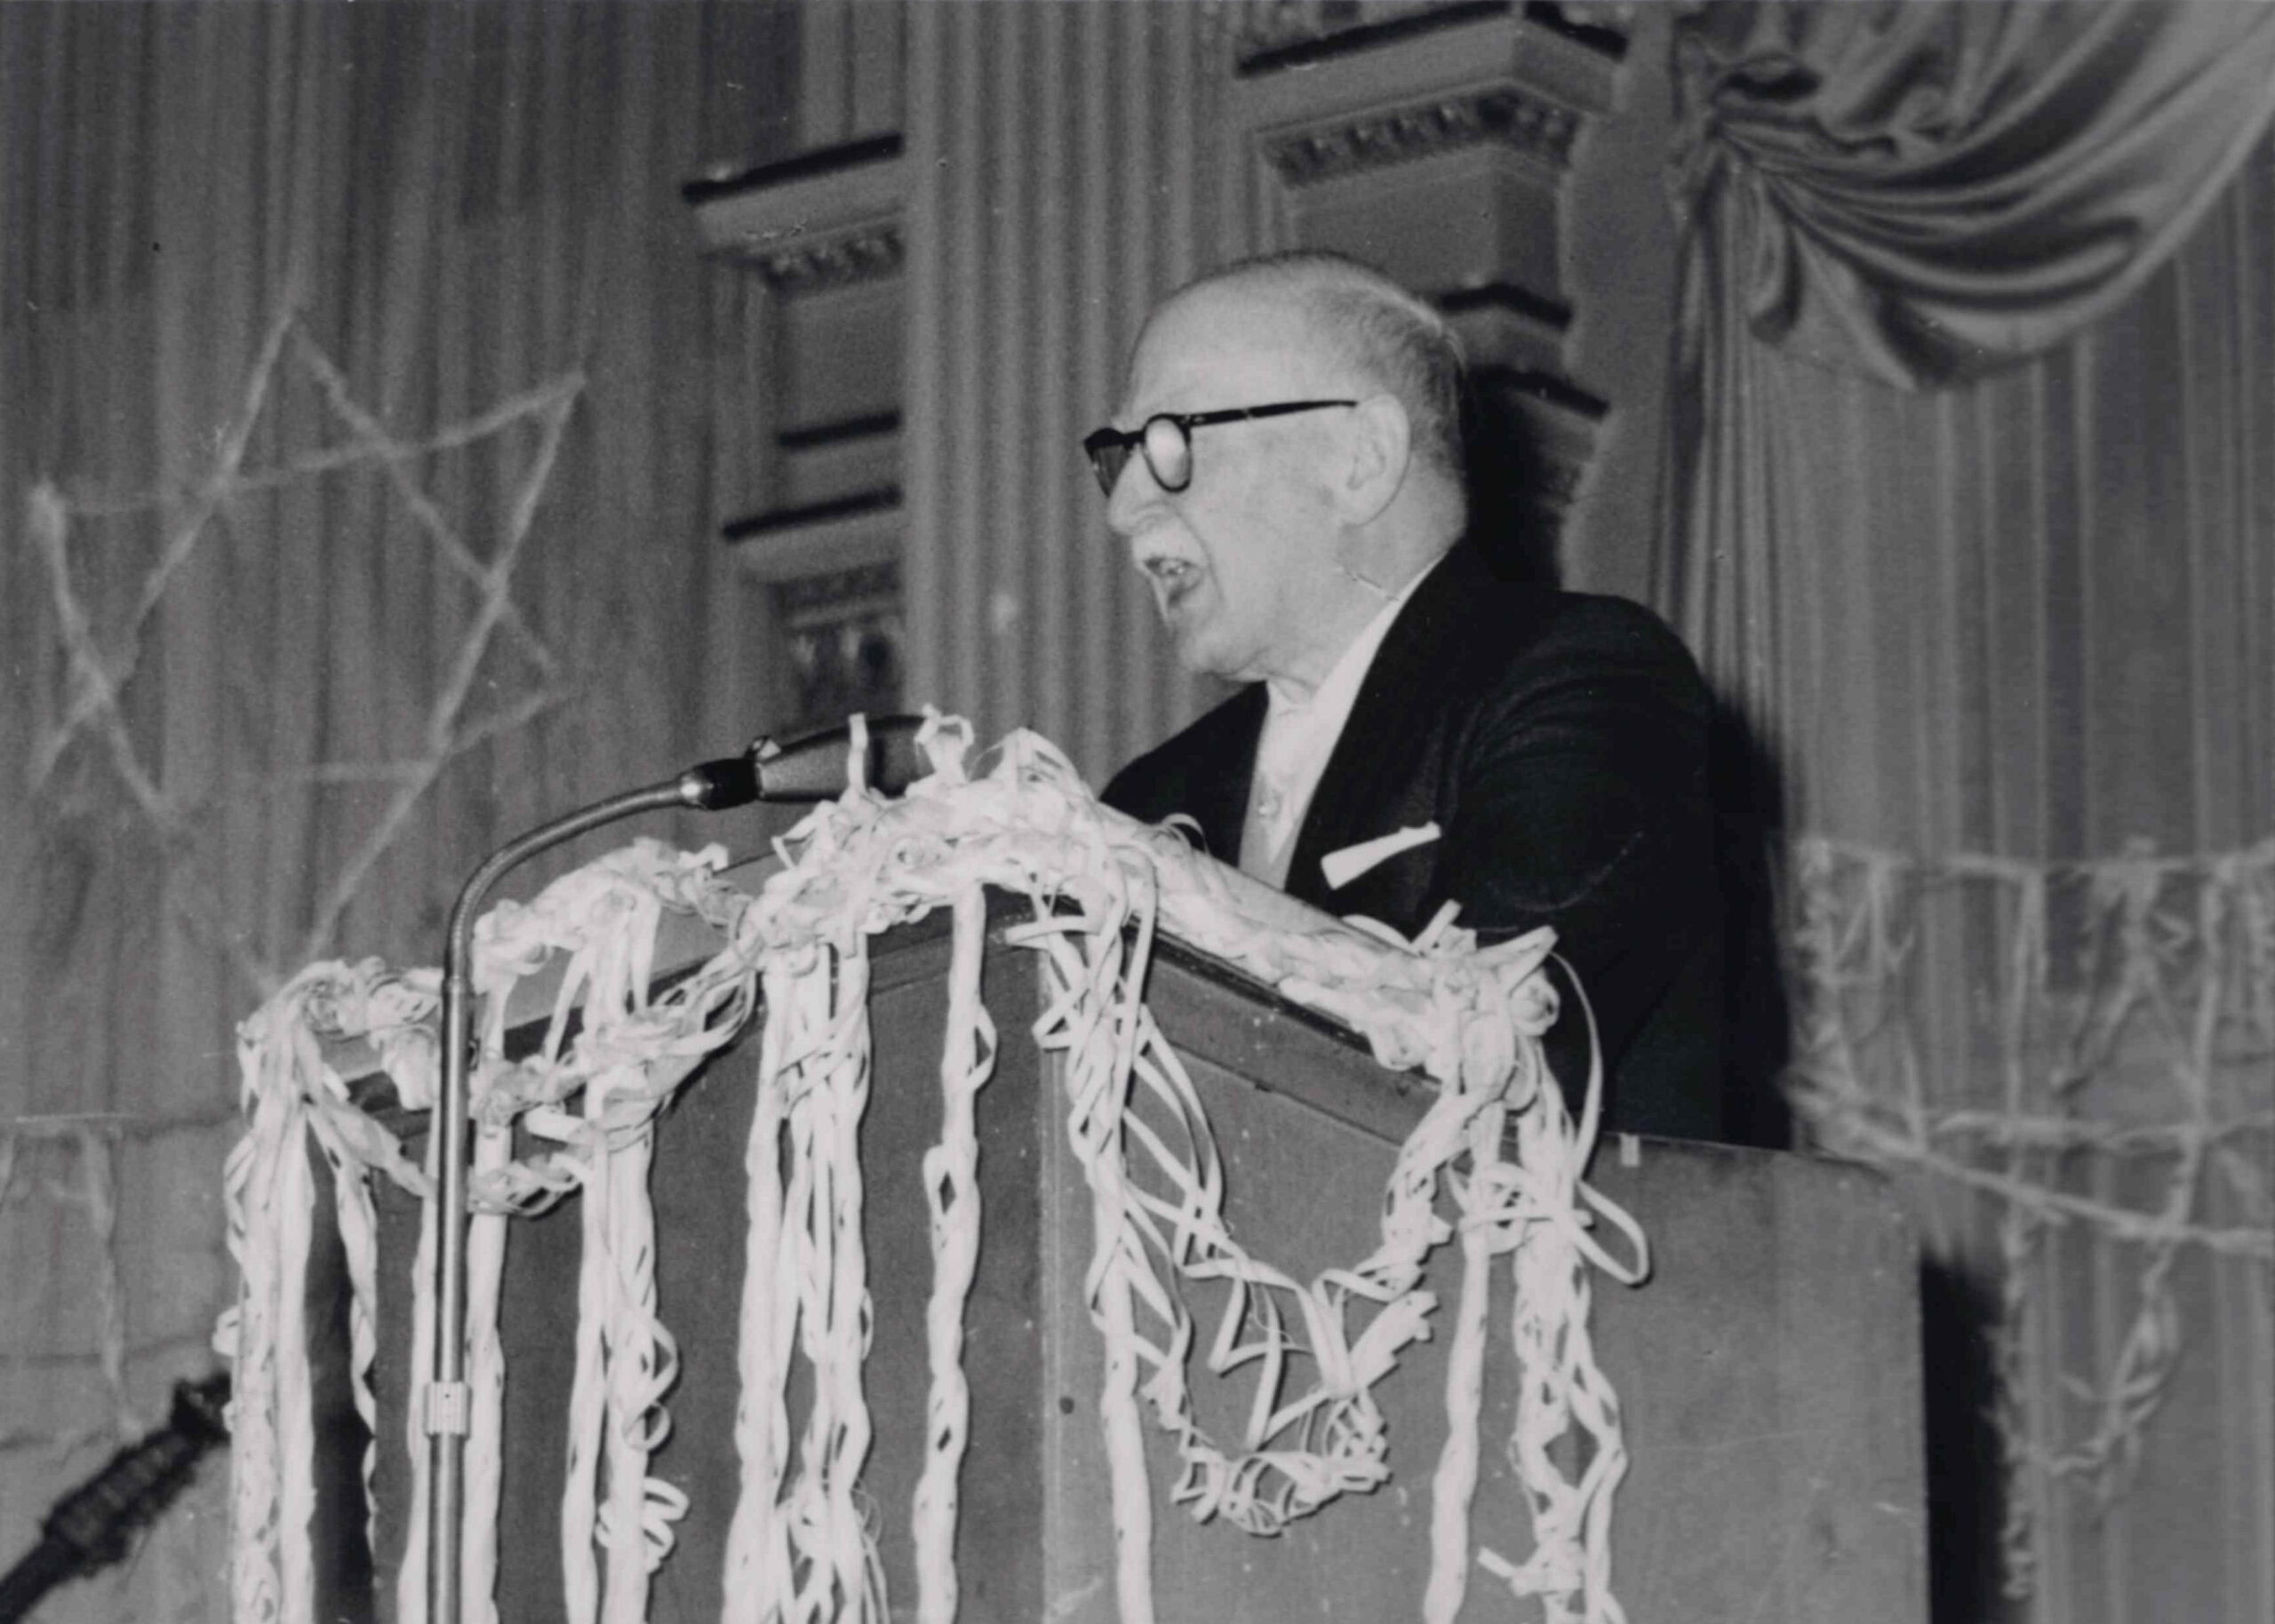 Dr. Friedrich Reichmann, président de la communauté juive de Wiesbaden, lors d'une manifestation communautaire vers 1963. Collection Communauté juive de Wiesbaden